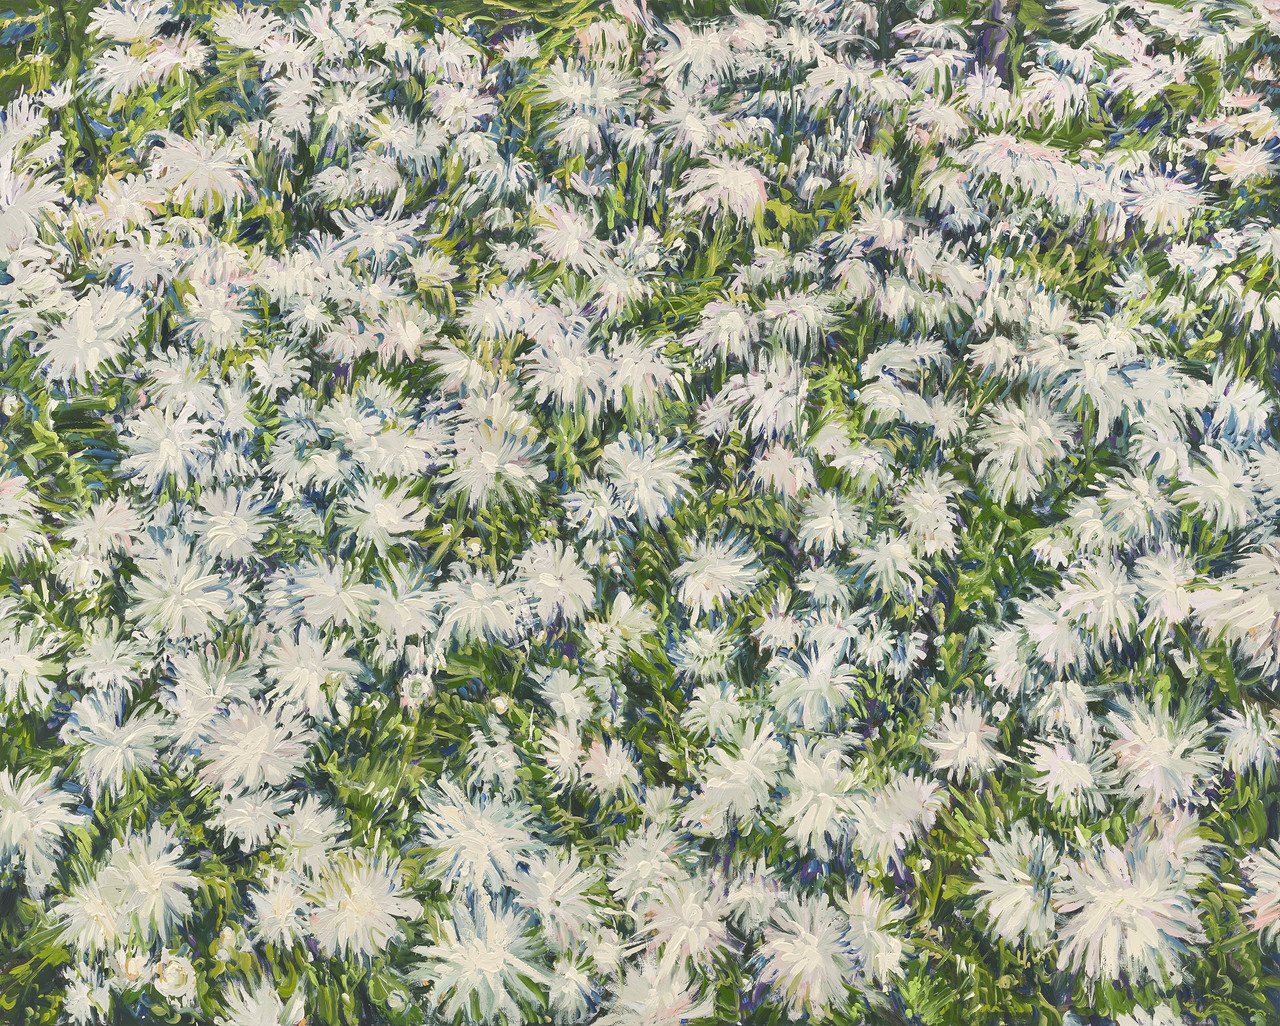 Little Flowers 9 130x162cm oil on canvas 2022